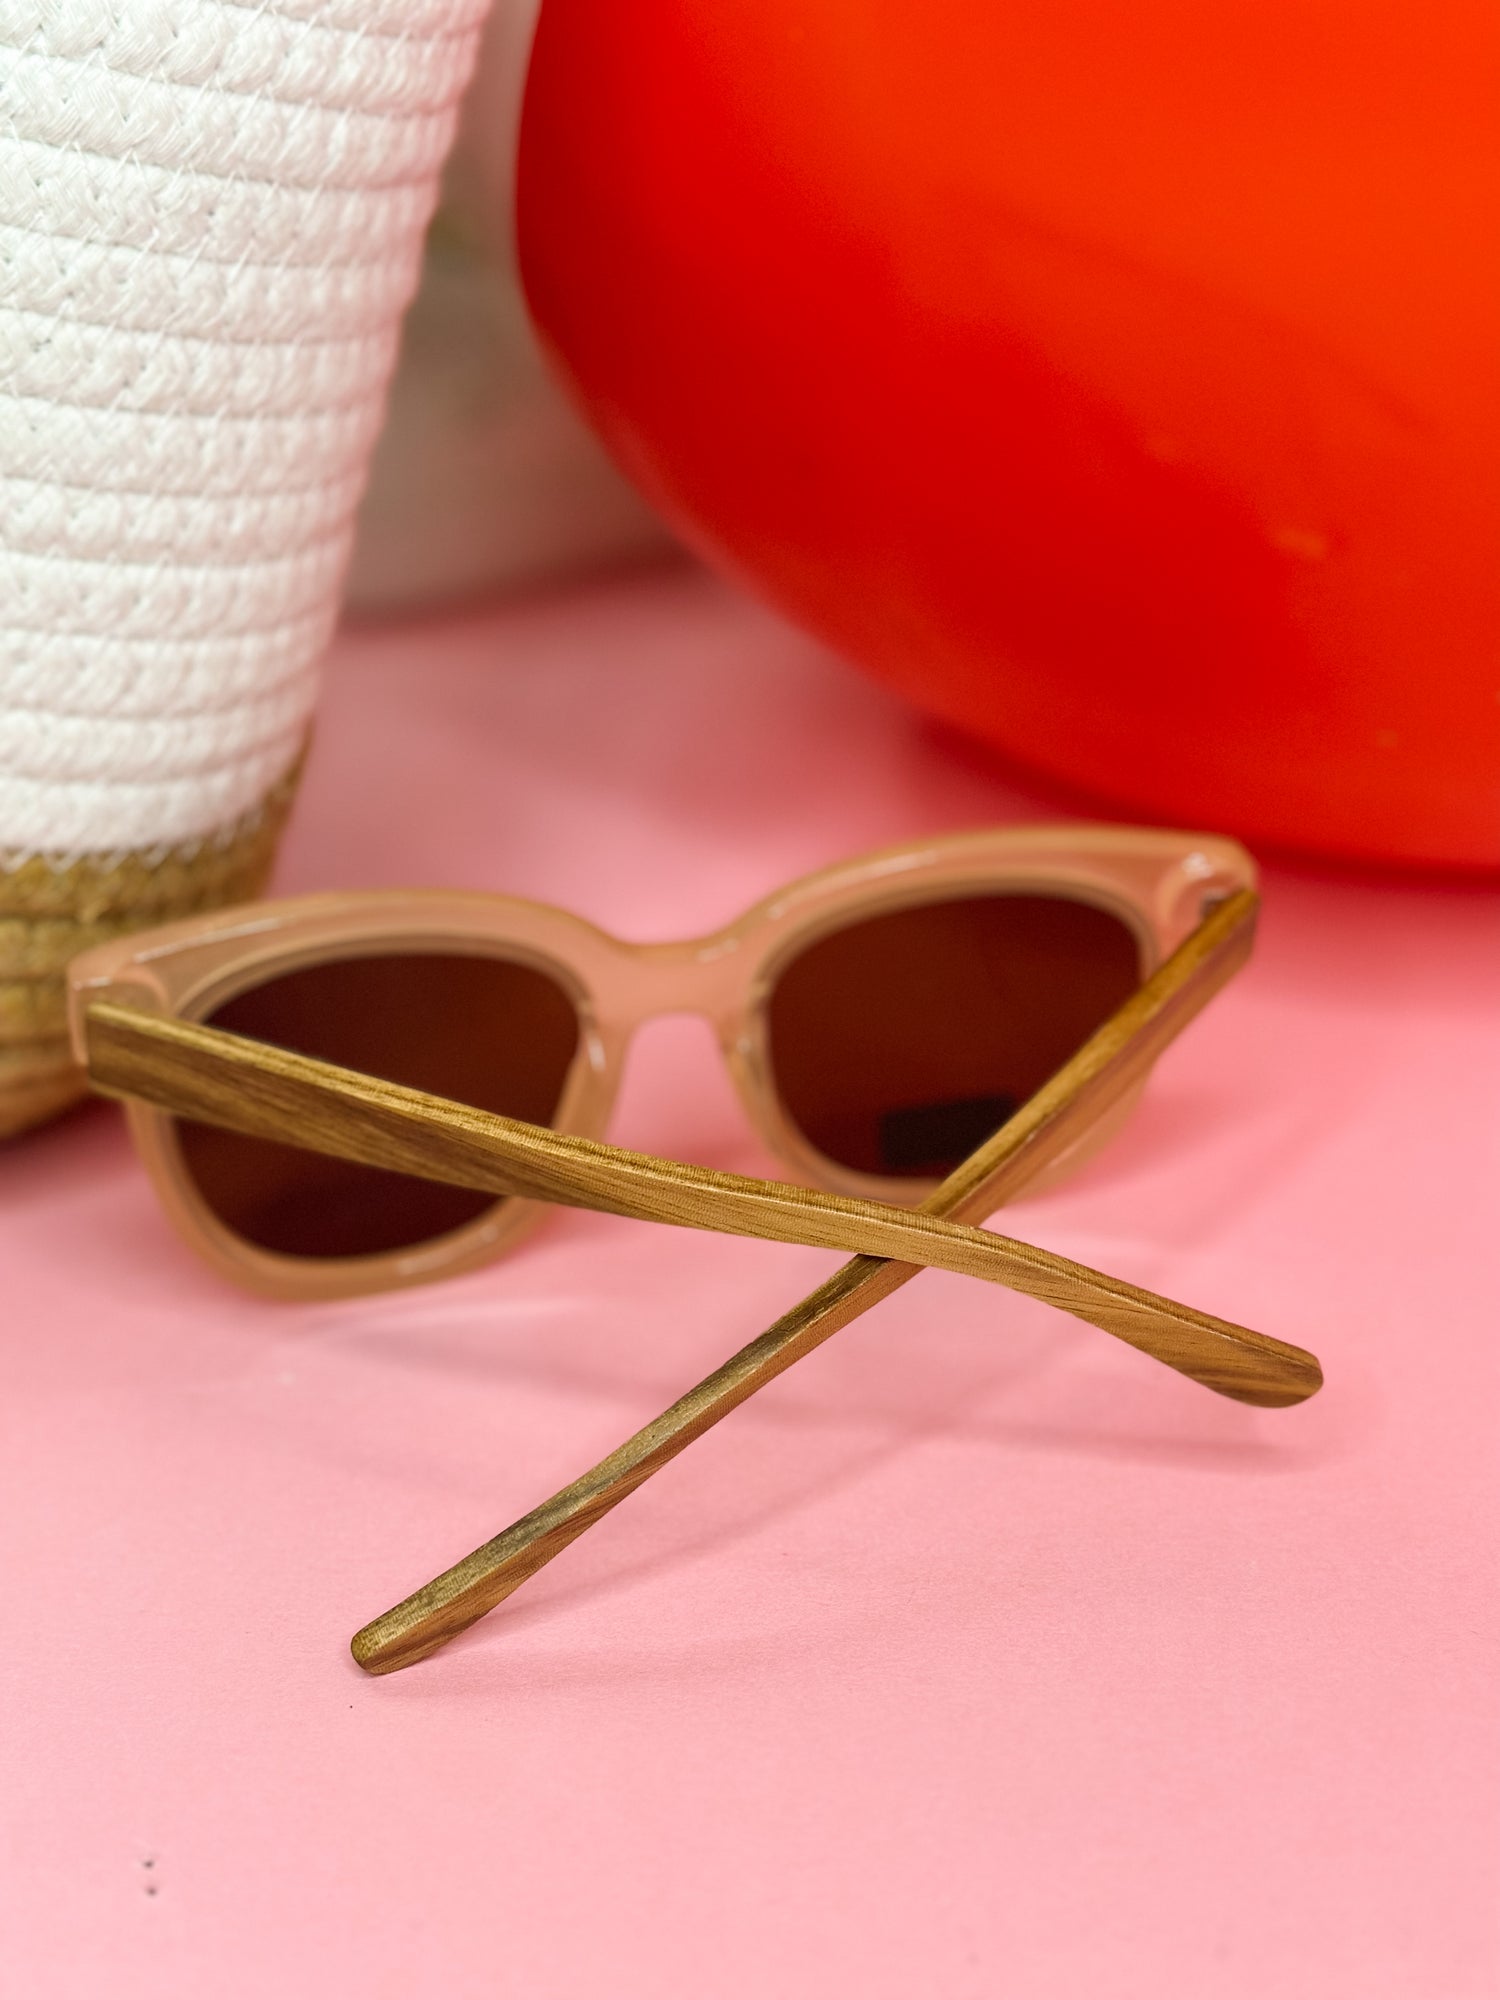 The Emry Polarized Brown Lens Wood Arm Sunglasses